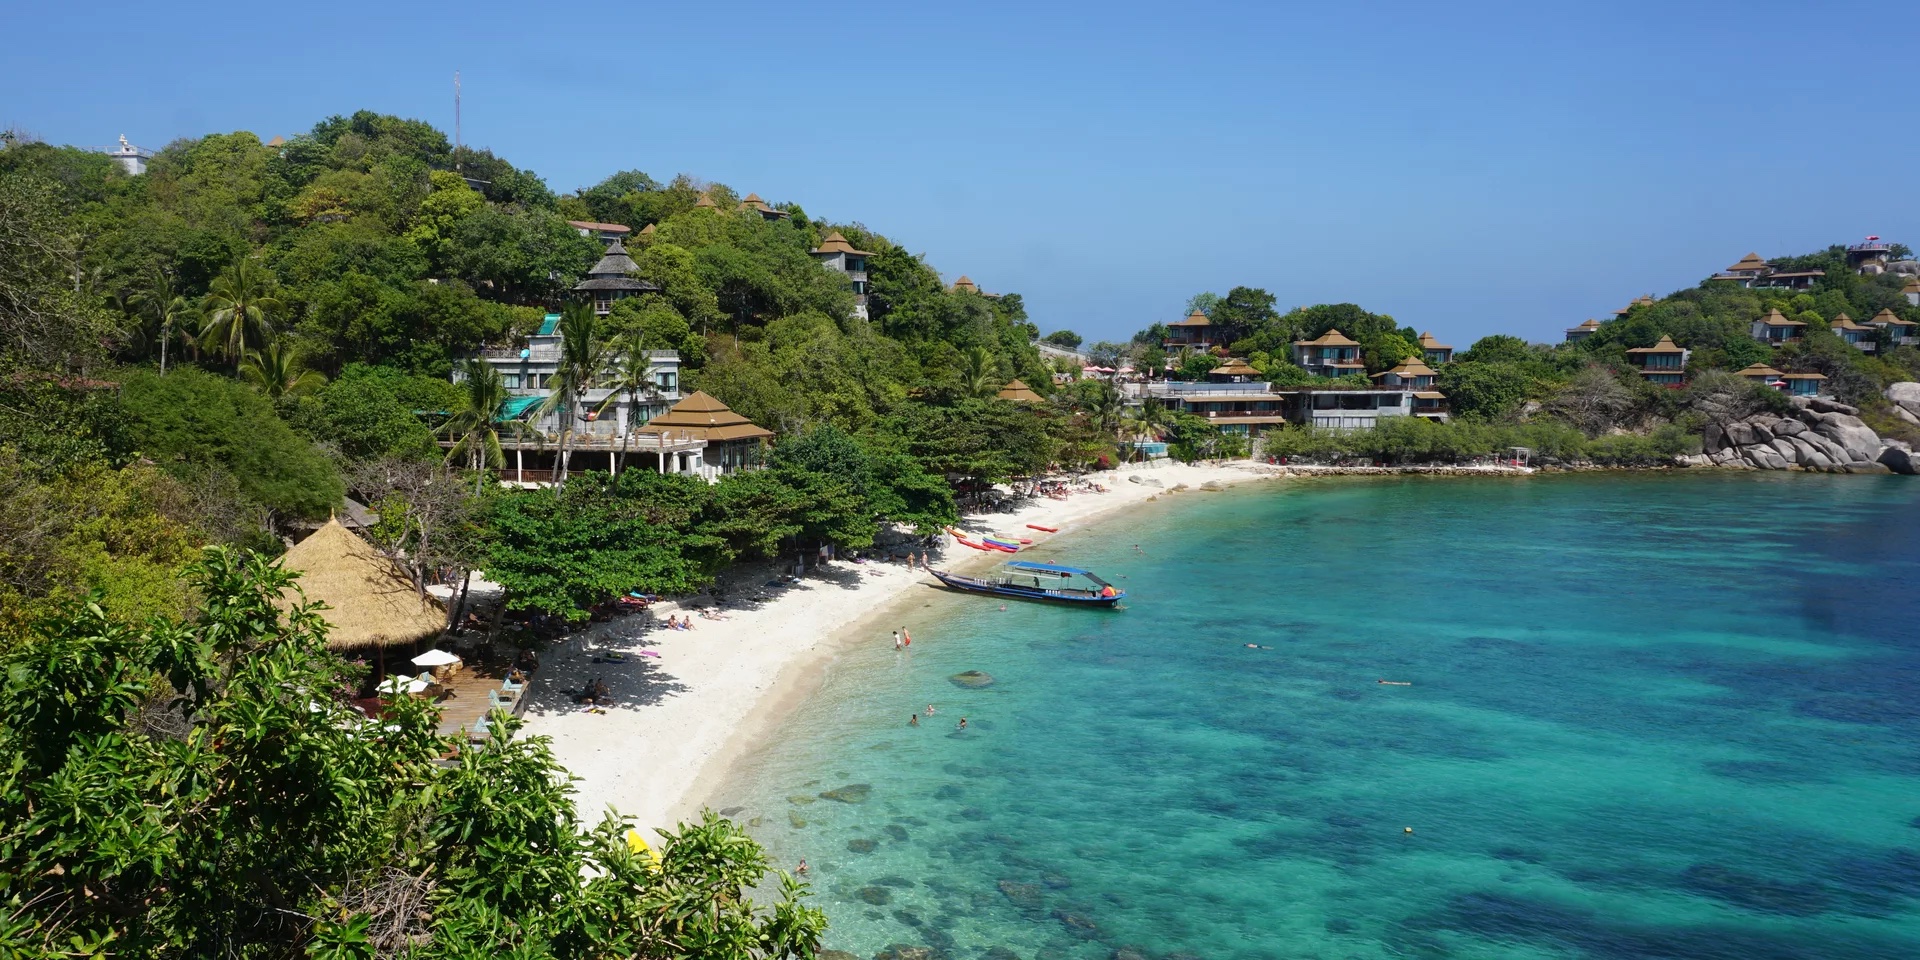 Coral view resort - best dive resorts in Thailand